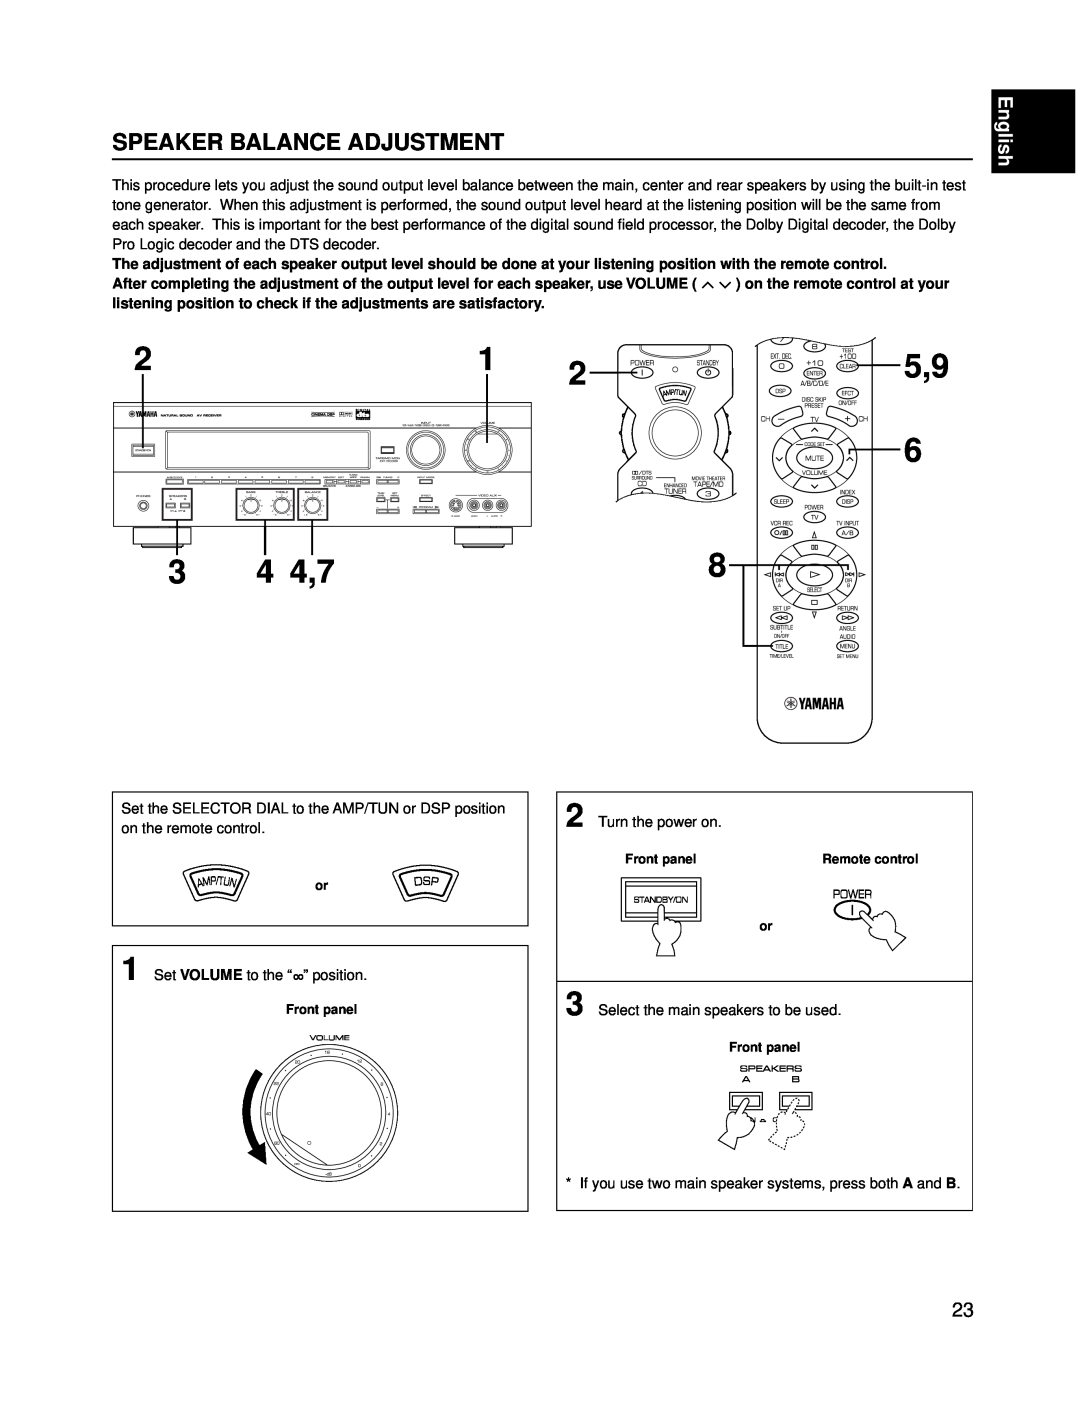 Yamaha RX-V595A owner manual 4 4,7, Speaker Balance Adjustment, English 